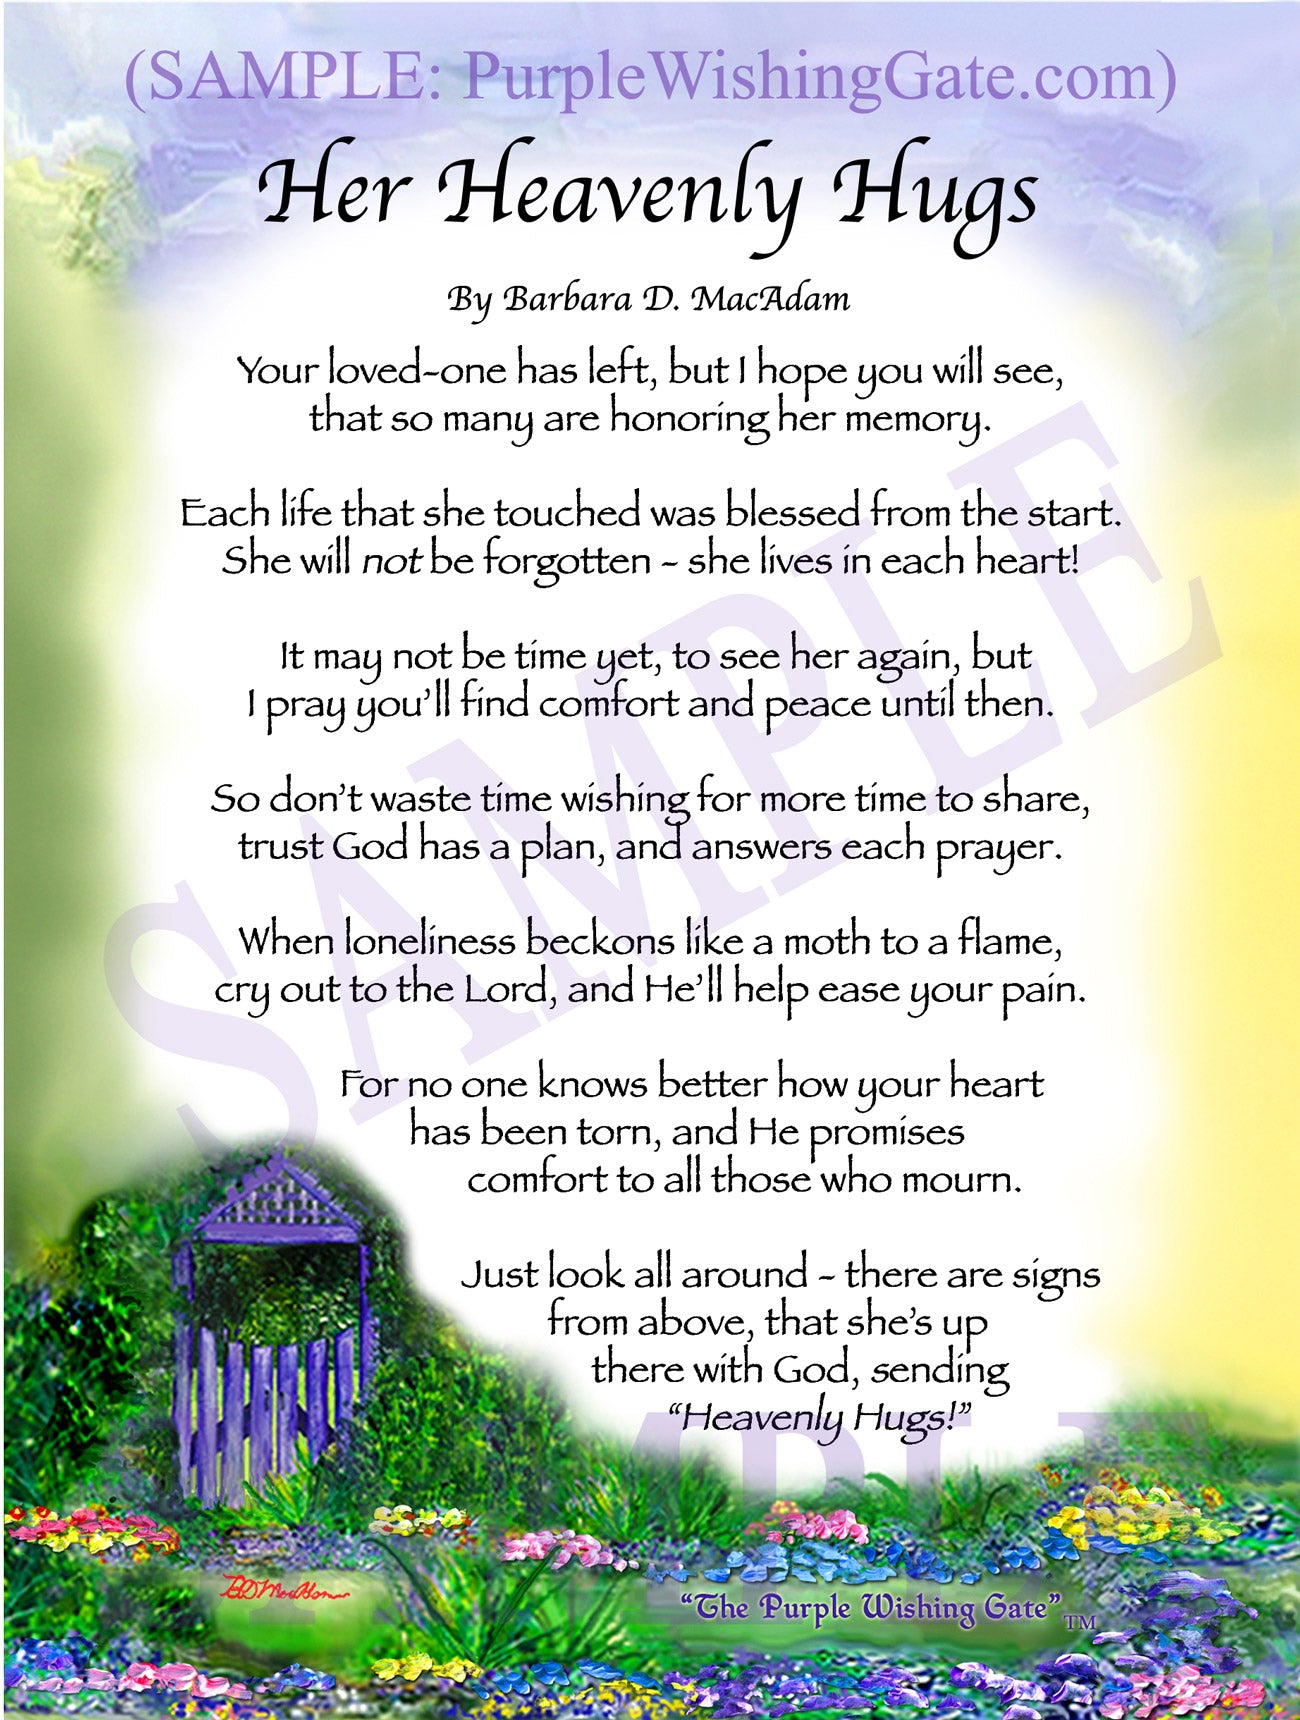 
              
        		Her Heavenly Hugs - Sympathy Gift - PurpleWishingGate.com
        		
        	